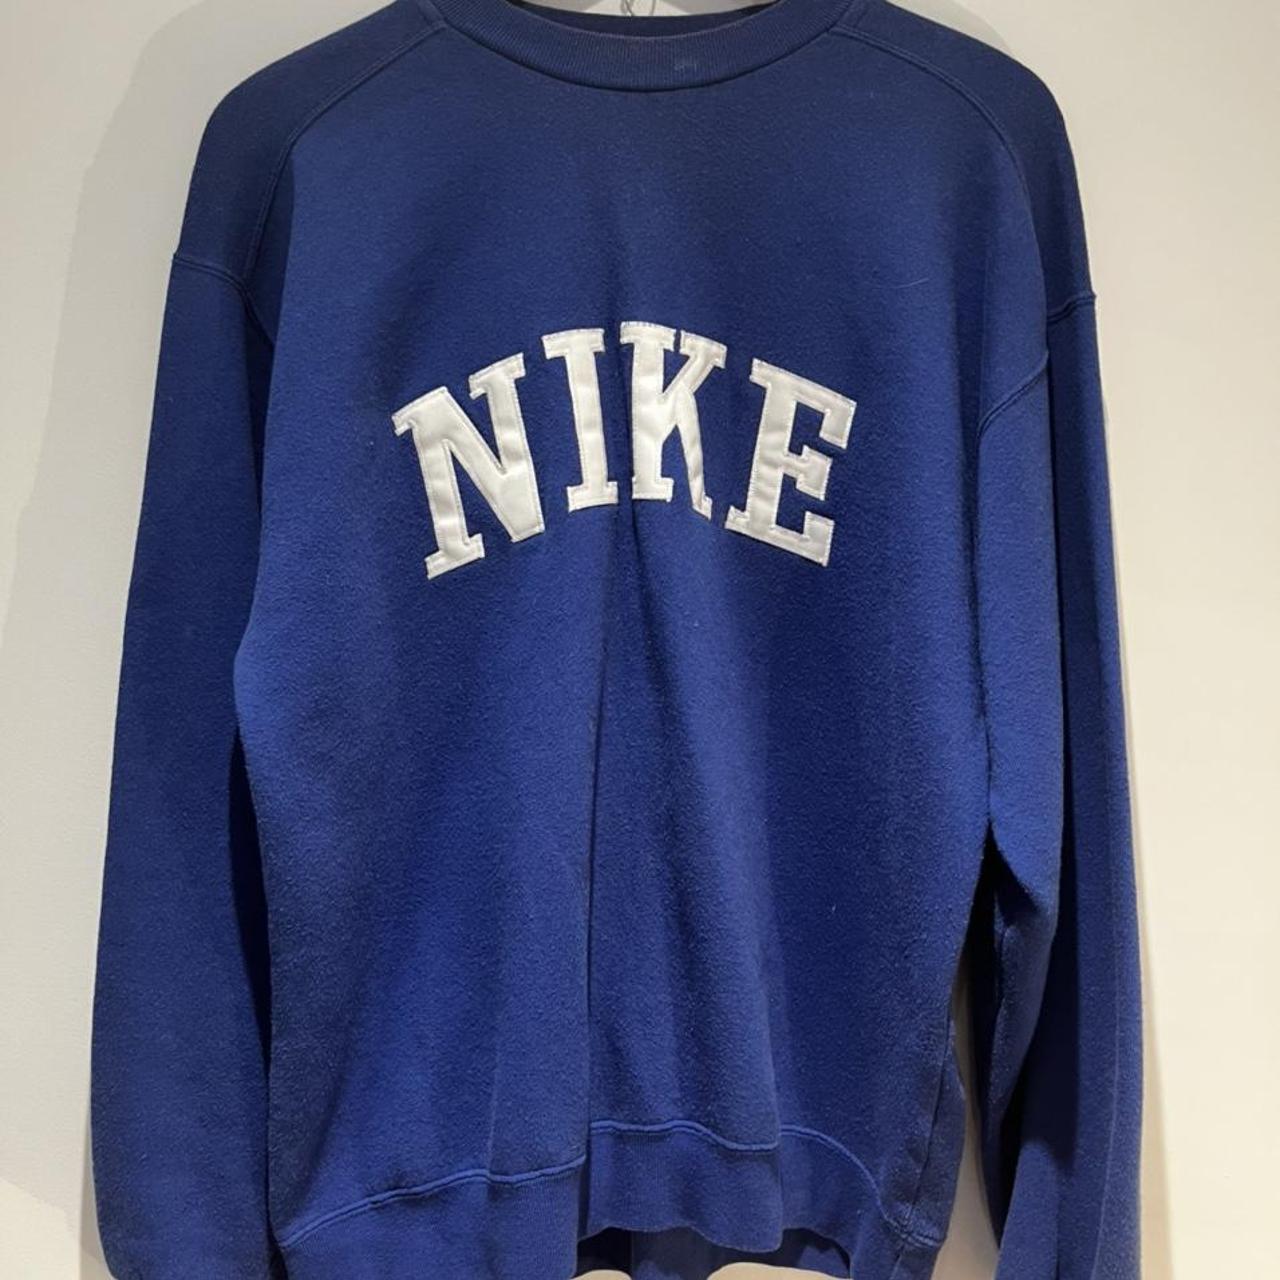 Vintage blue Nike sweatshirt - 9/10 quality - size... - Depop